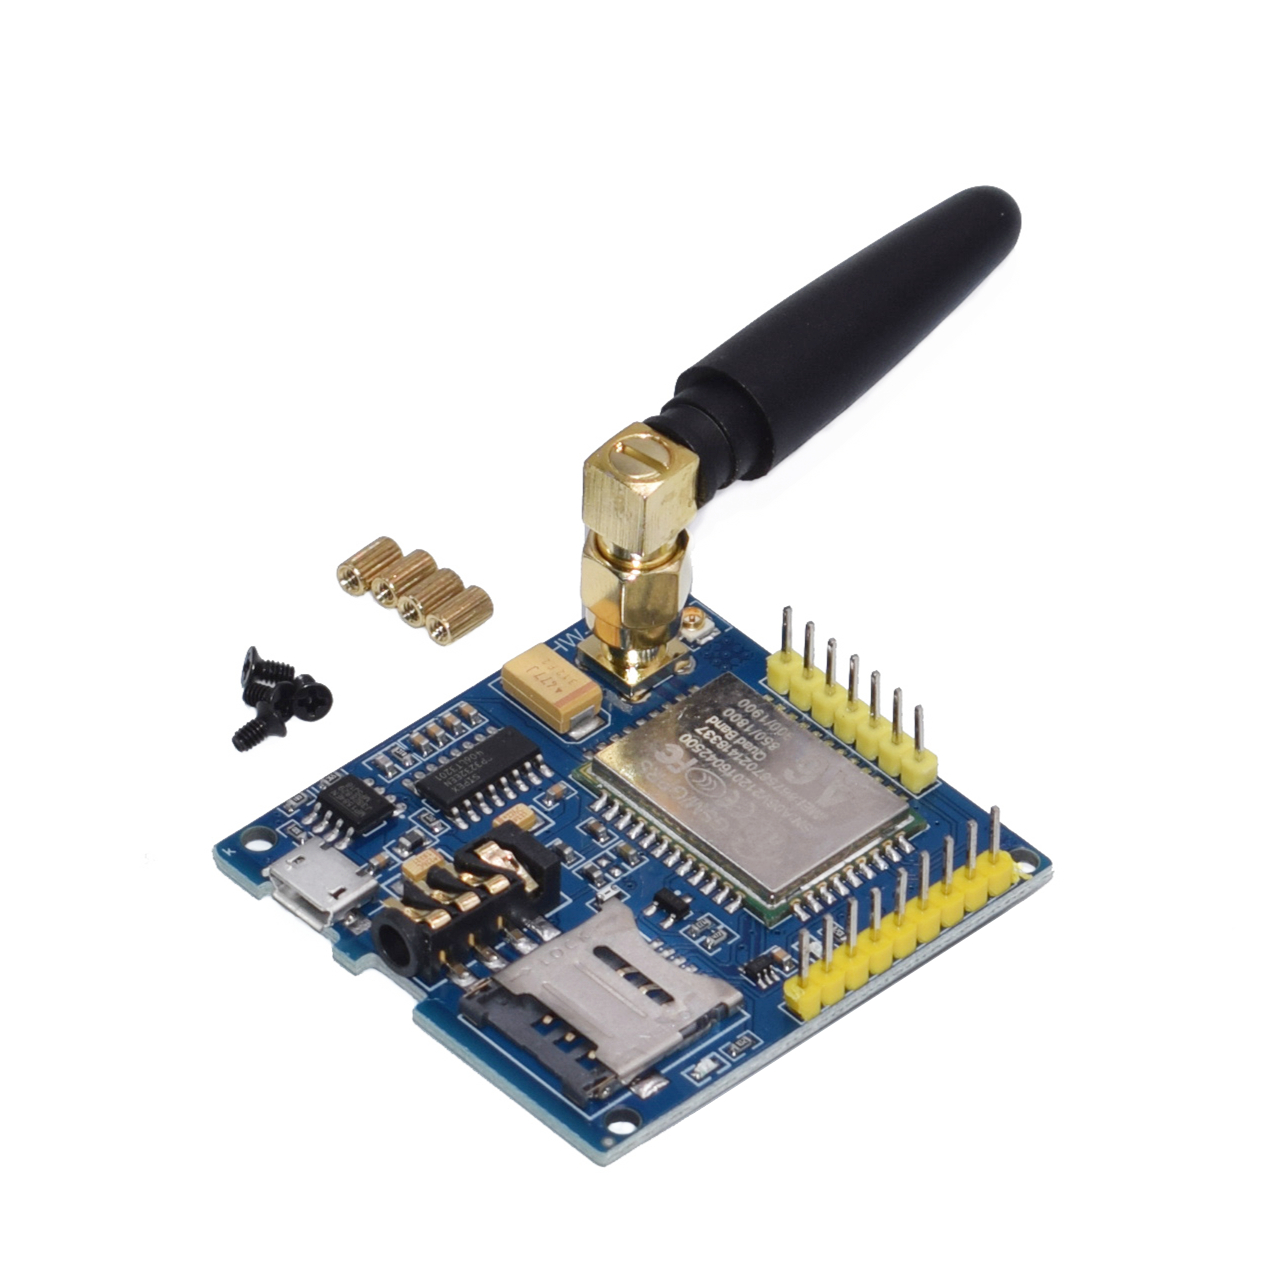 A6 GPRS Pro Serial GPRS GSM Module Core DIY Developemnt Board Replace SIM900 